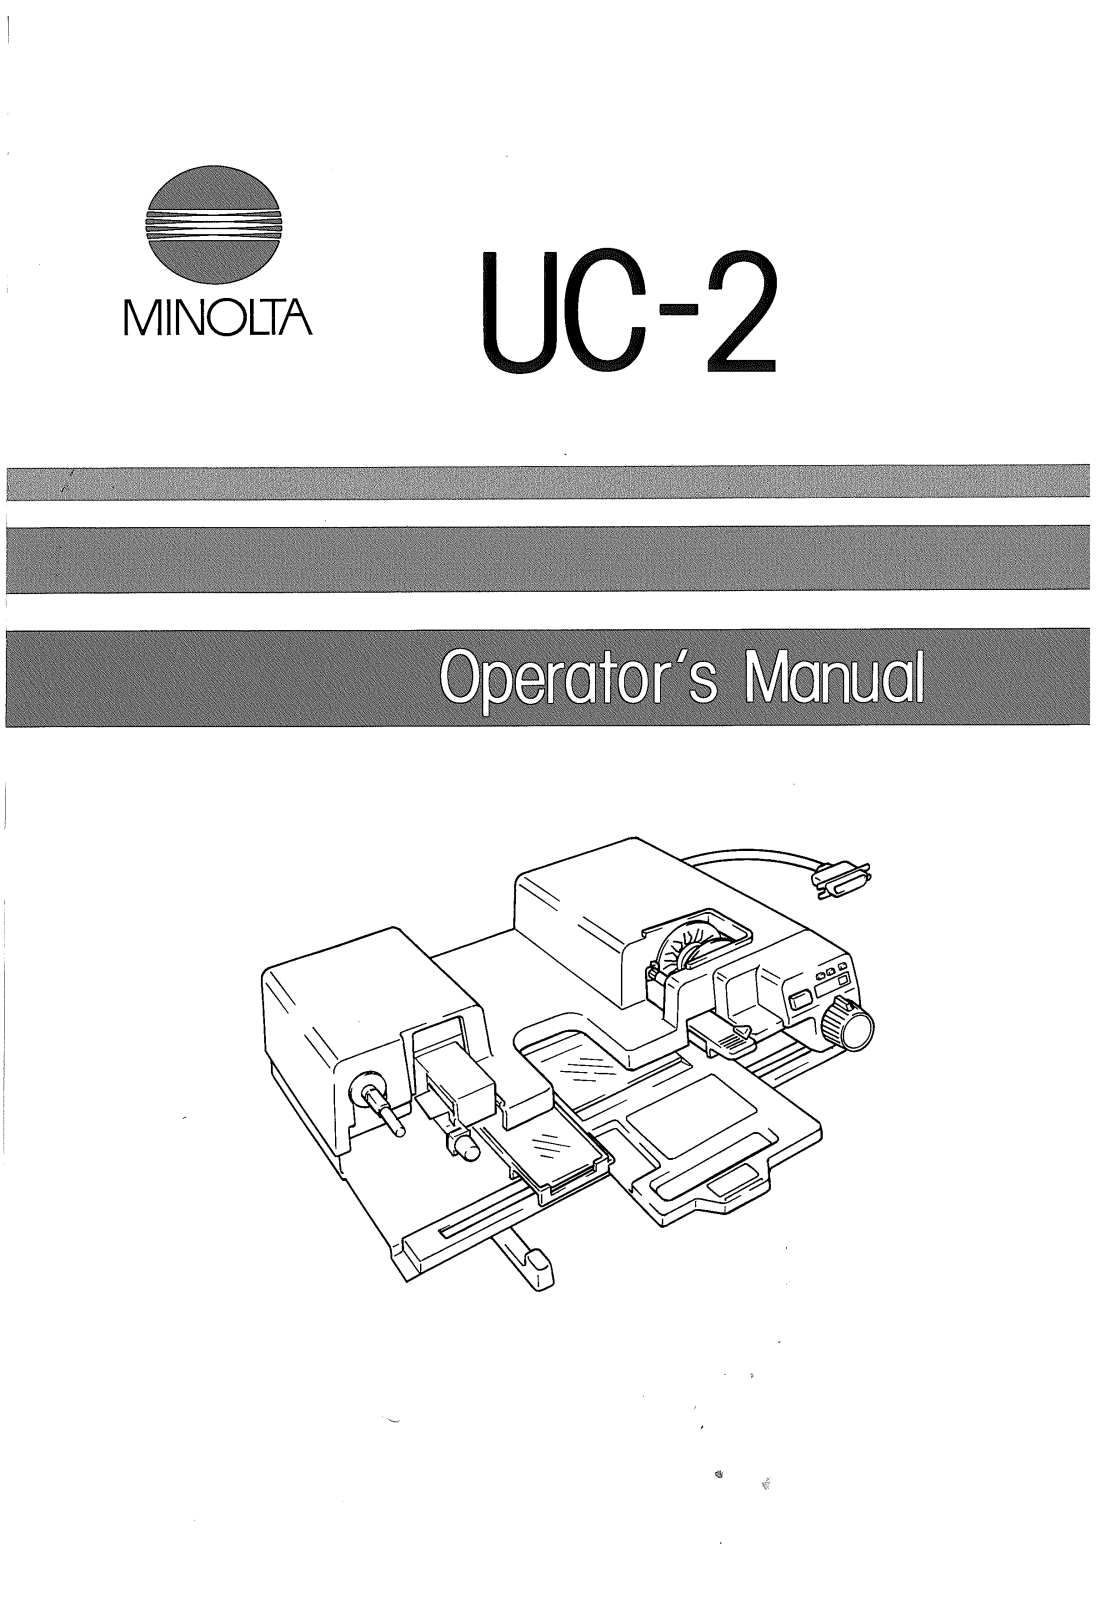 Konica Minolta UC-2 Manual